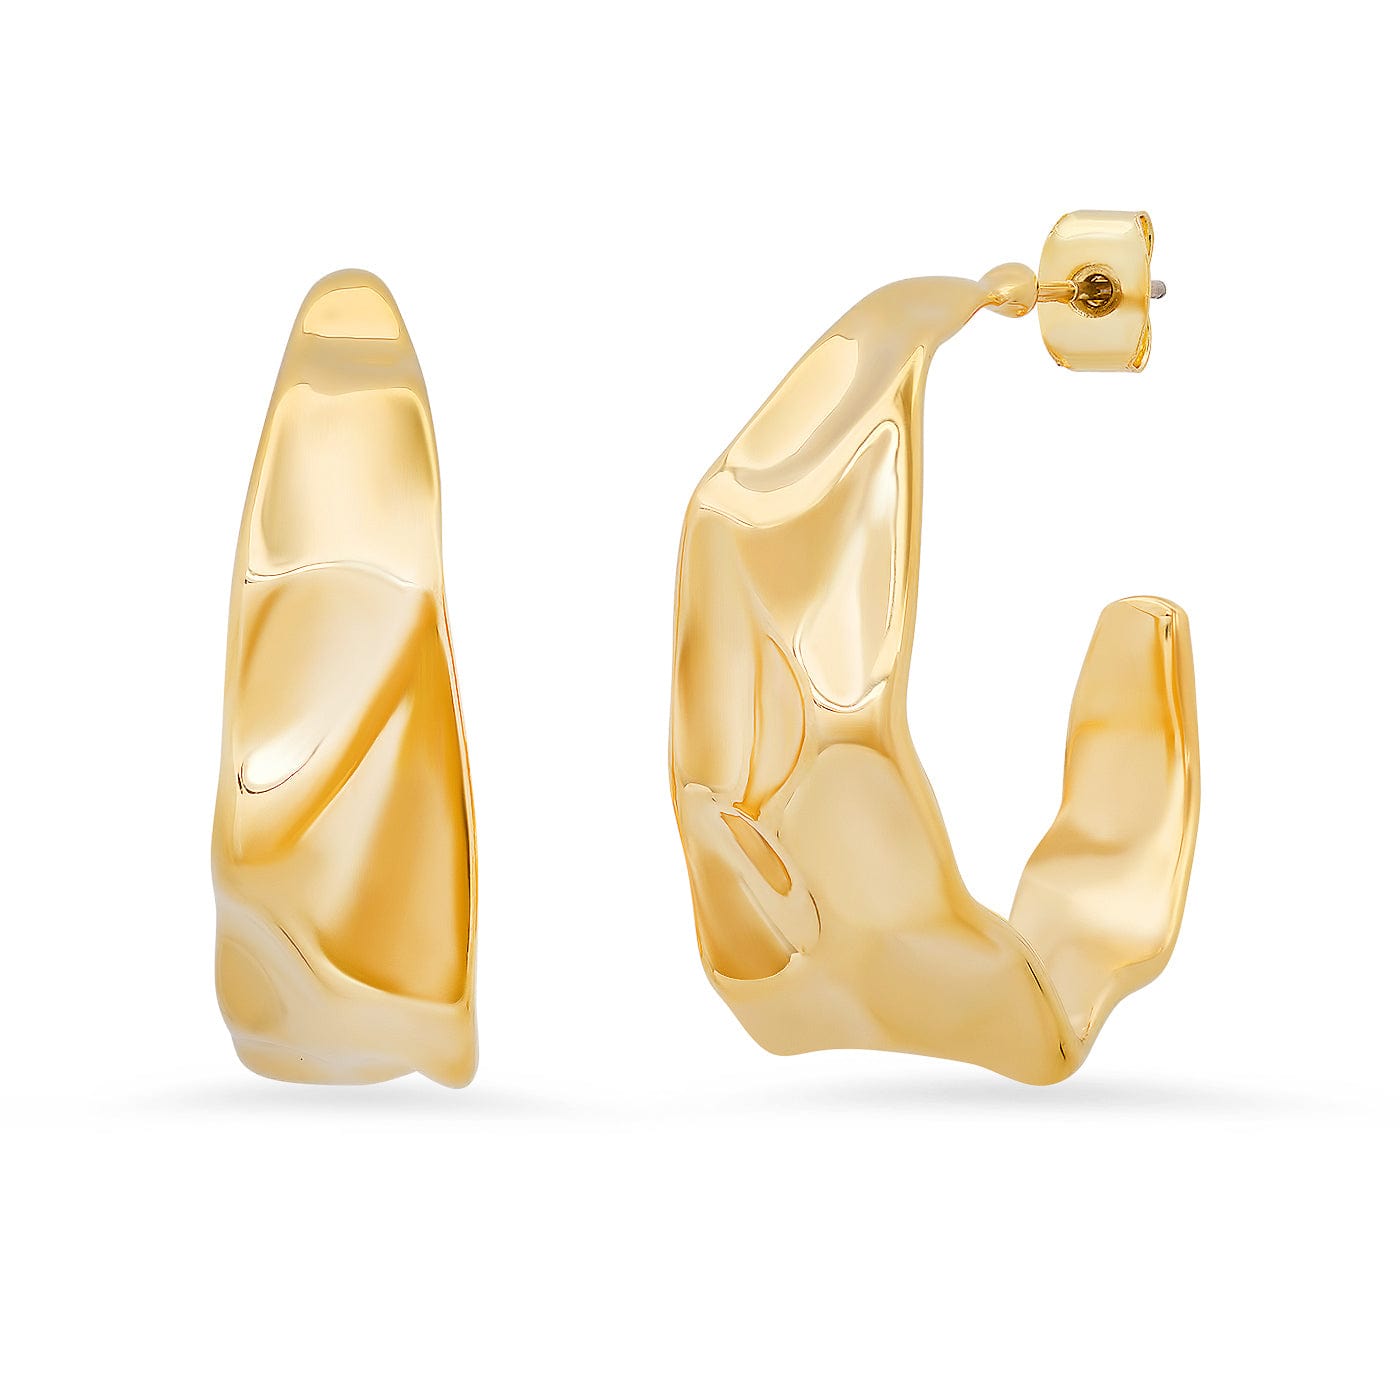 TAI JEWELRY Earrings Hammered Gold Huggies